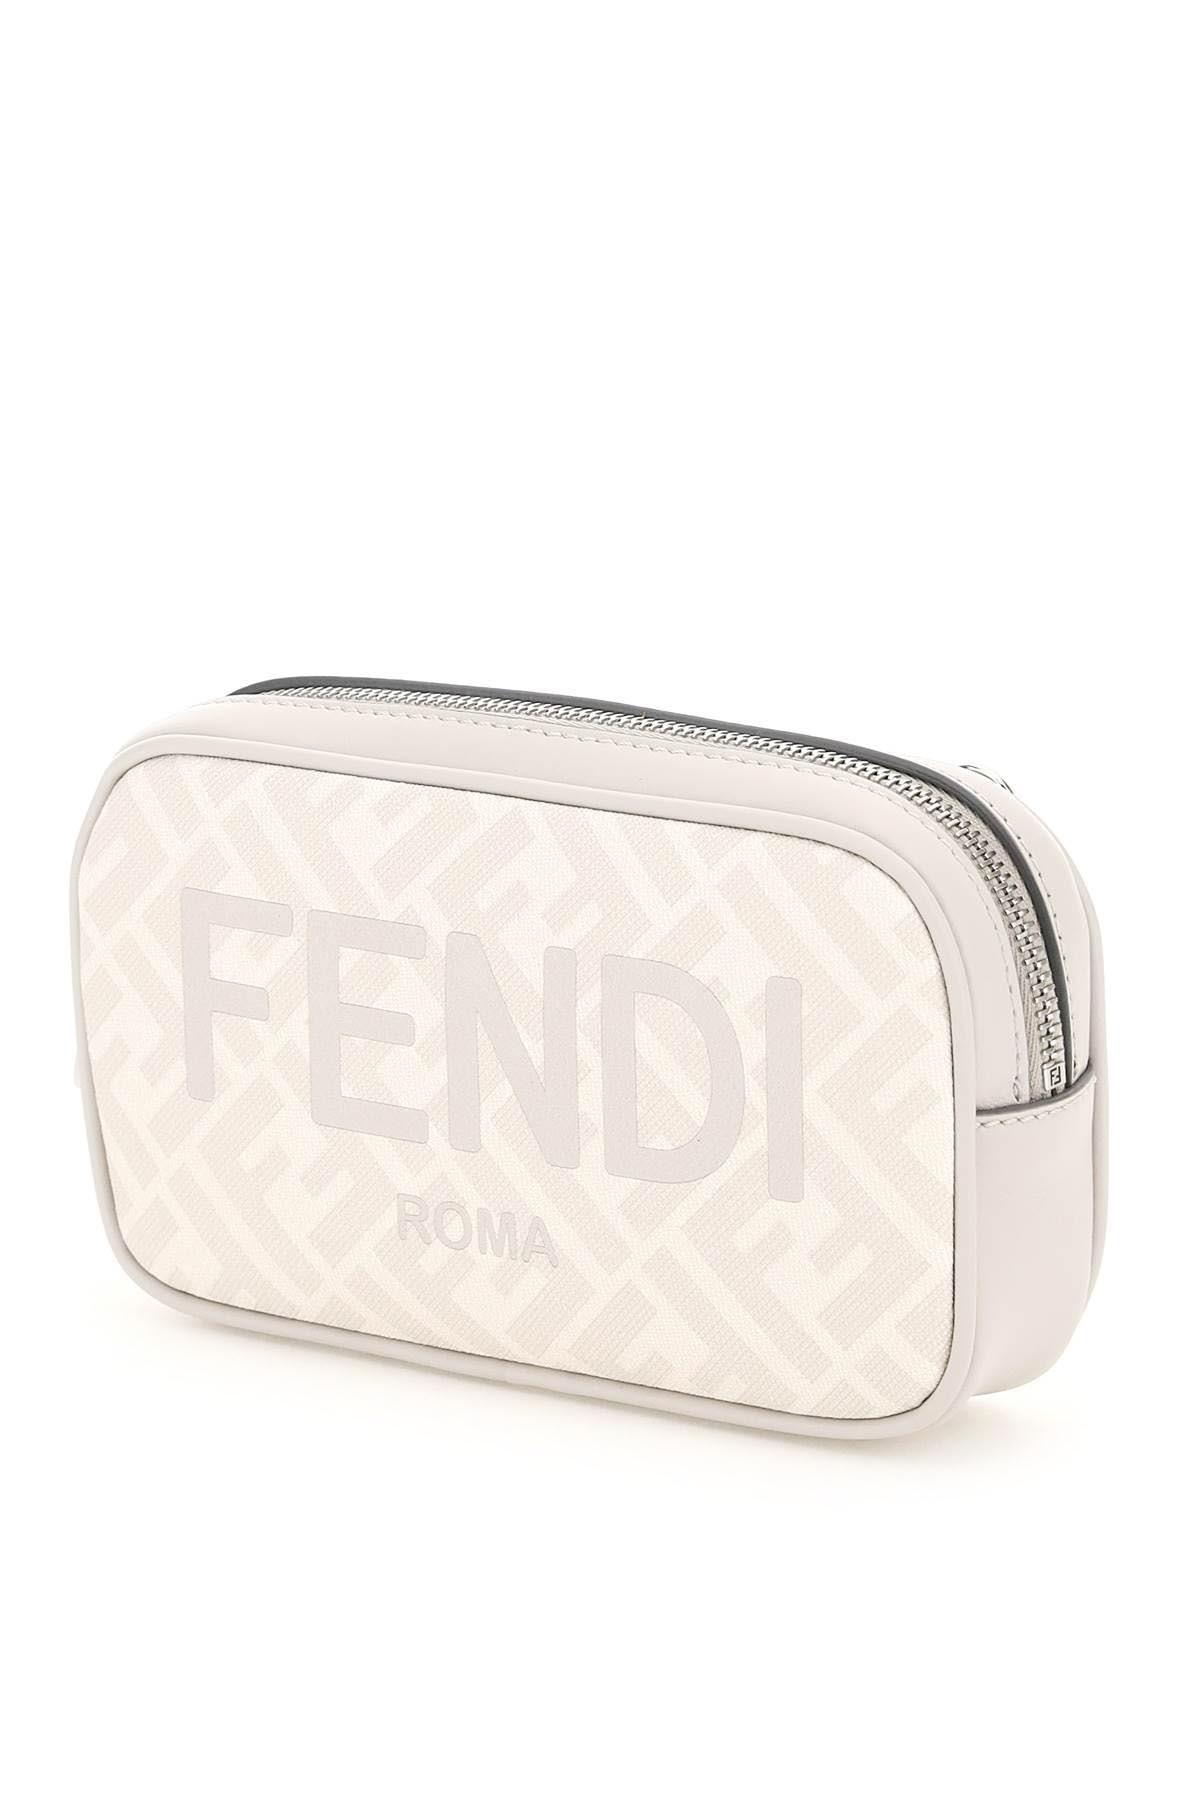 Fendi Compact Camera Case In ROMA Logo FF Motif Fabric White